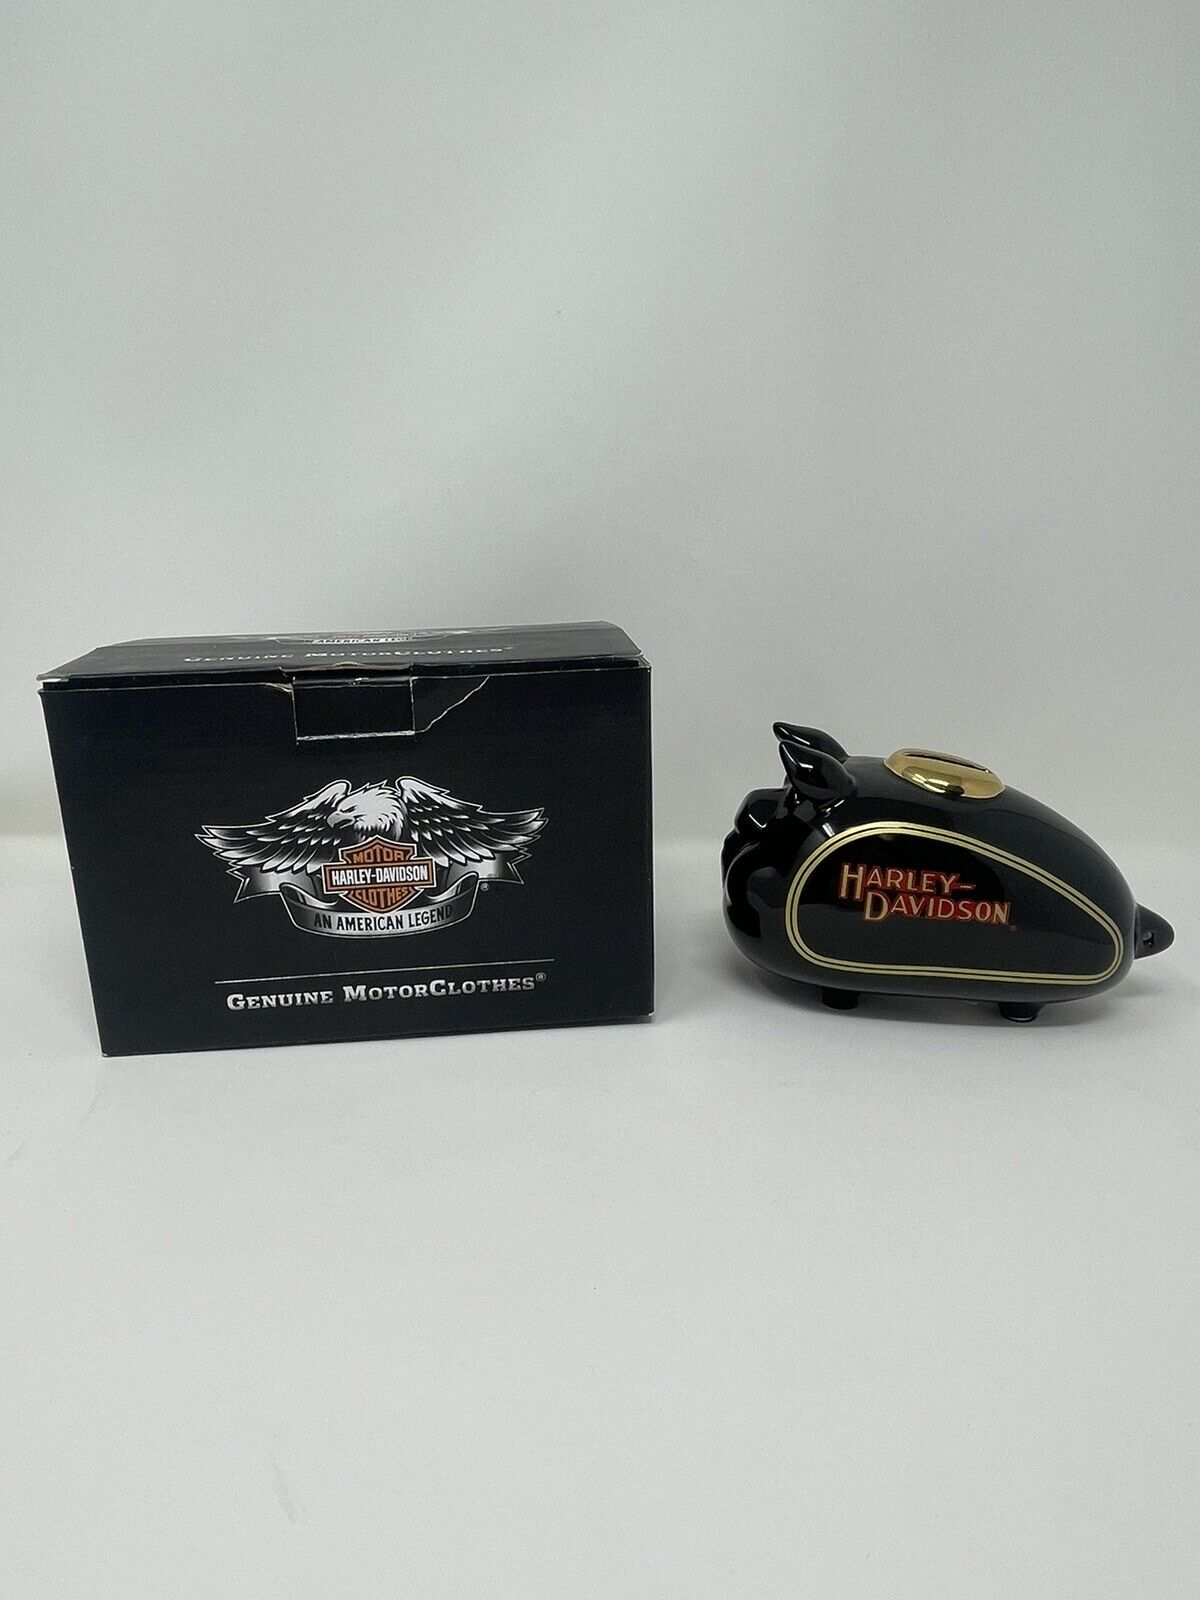 Vintage Harley Davidson mini hog Black/Gold Ceramic Piggy Bank, With Box